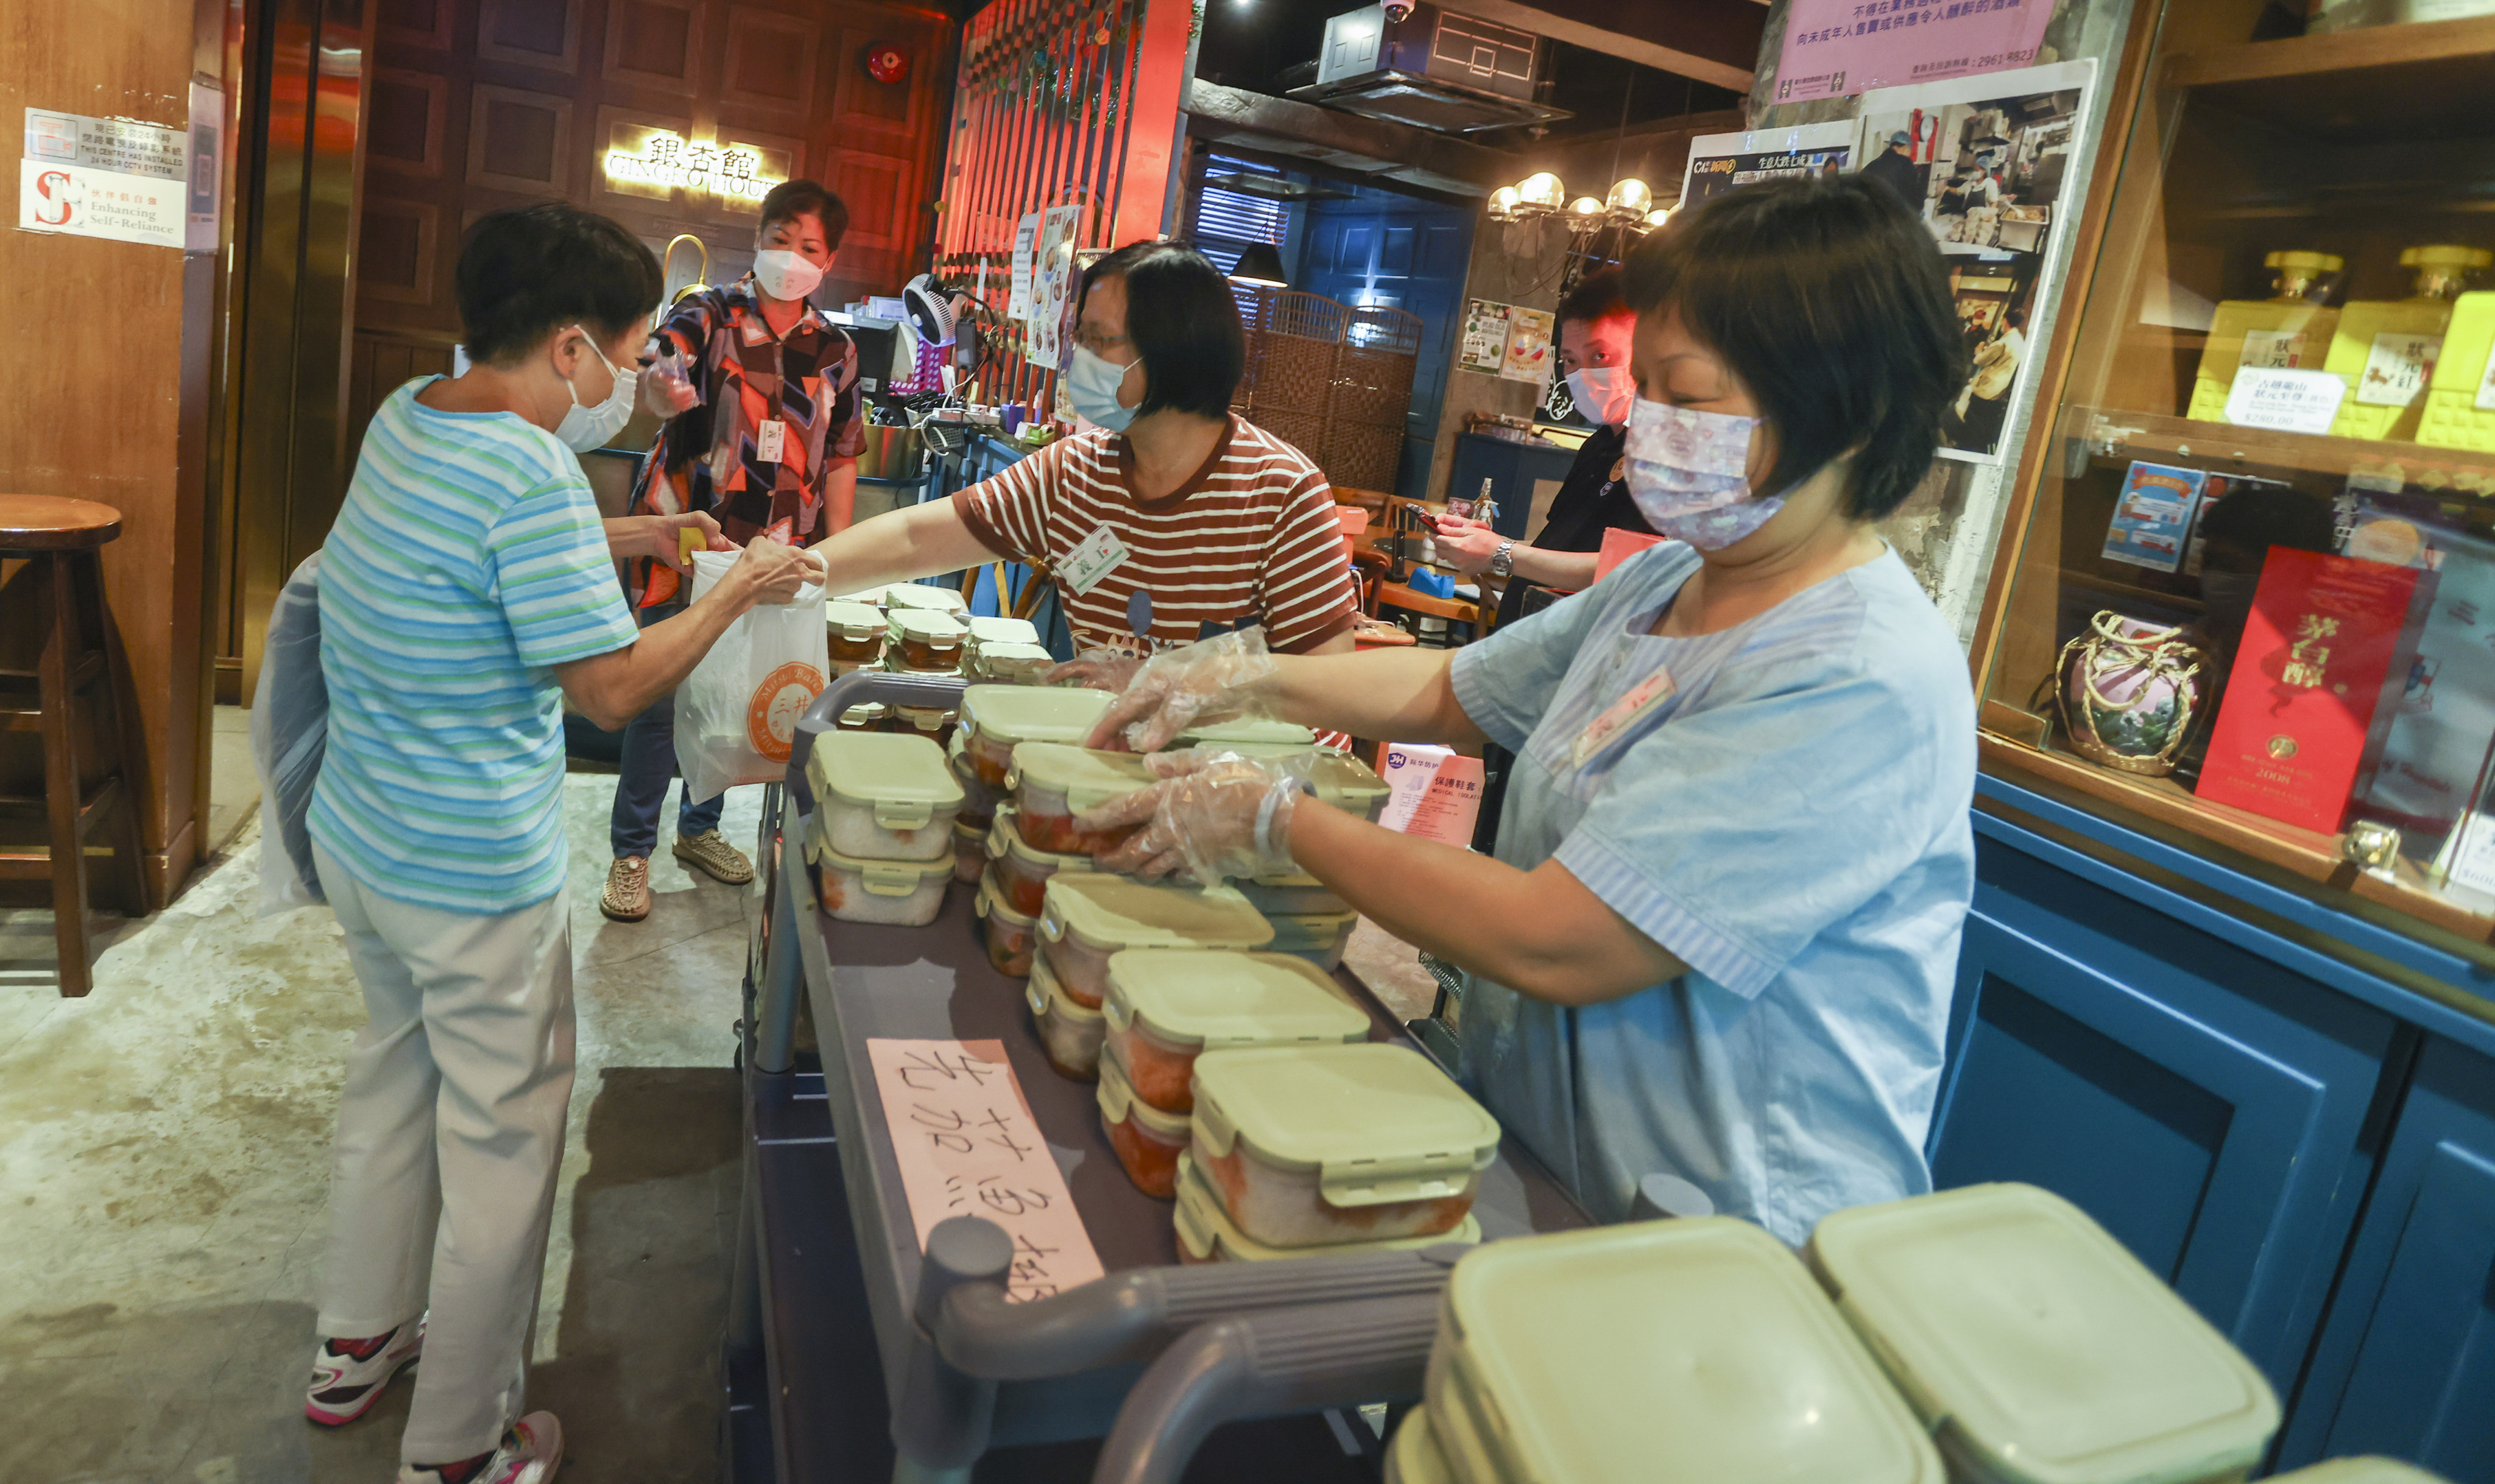 Gingko House’s Love Project Rice Box team in Yau Ma Tei on August 1. Photo: Jonathan Wong